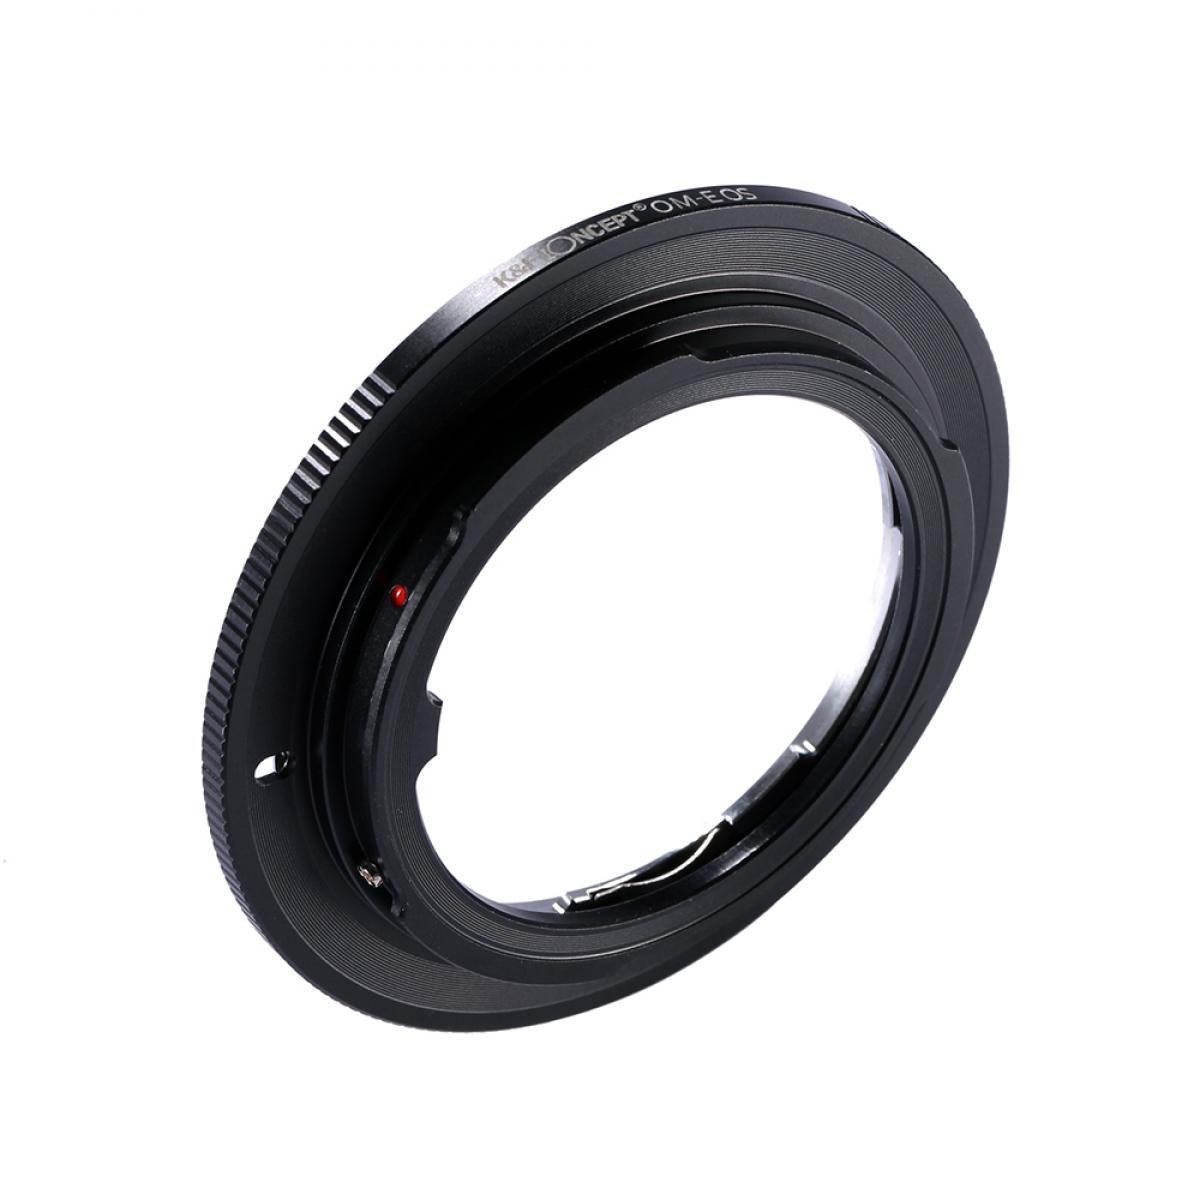 K&F Concept High Precision Lens Adapter KF06.132 for OM-EOS